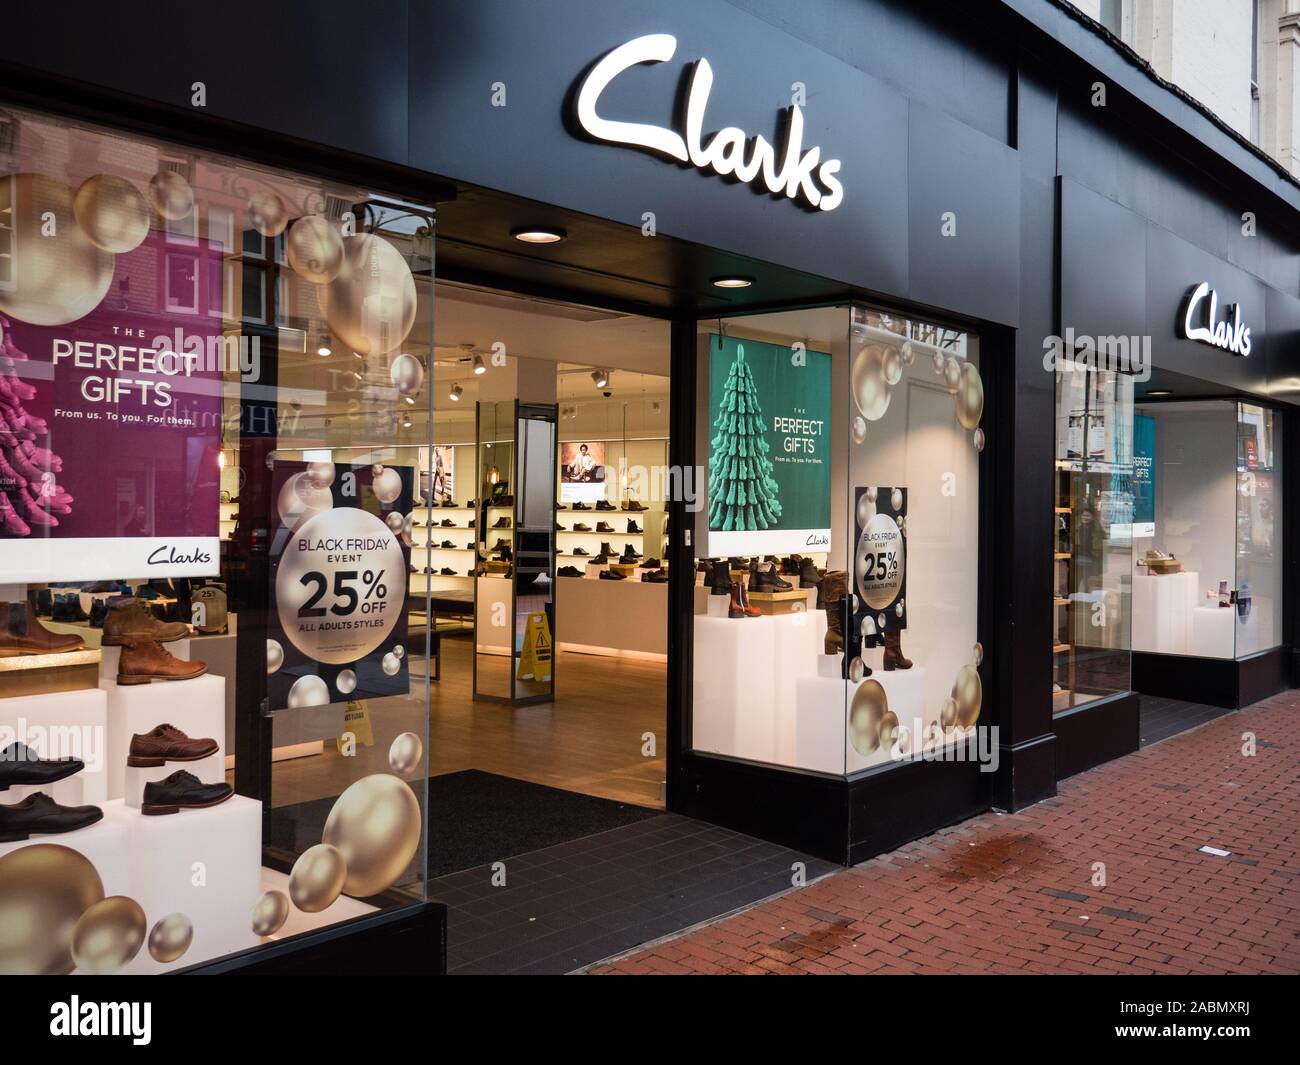 clarks shoe shop chelmsford